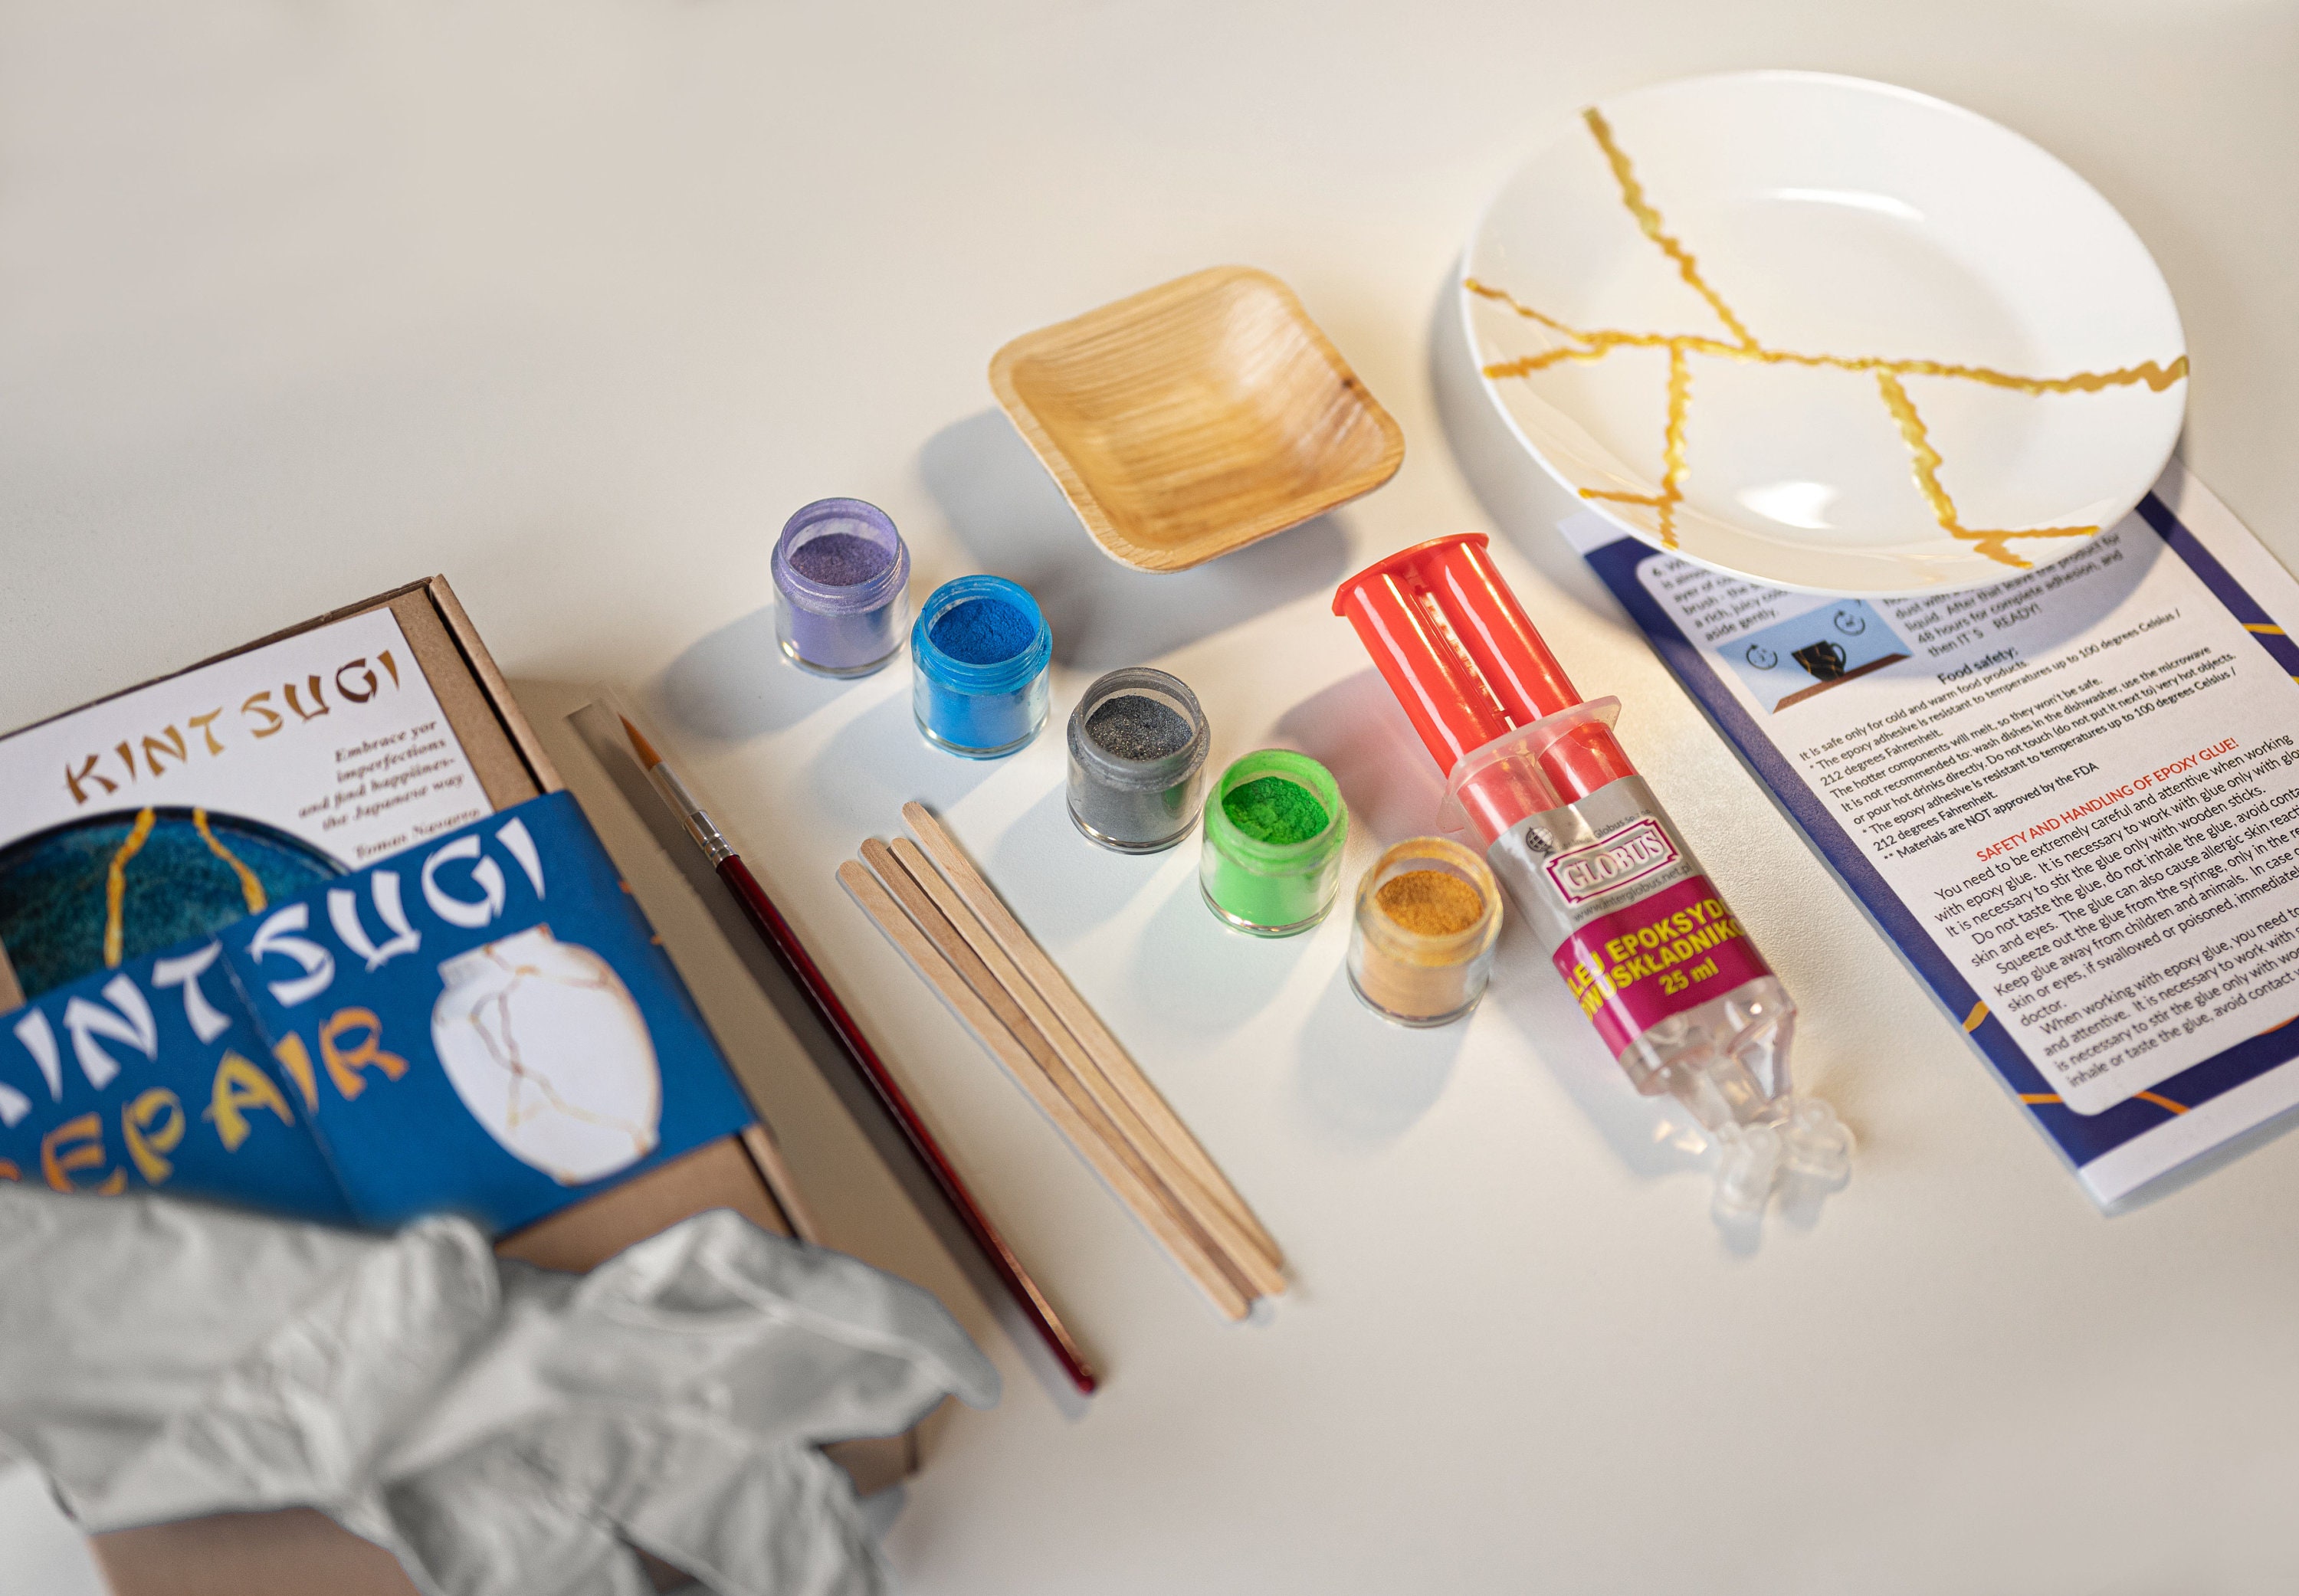 DIY Kintsugi Repair Kit Home Craft Kits 